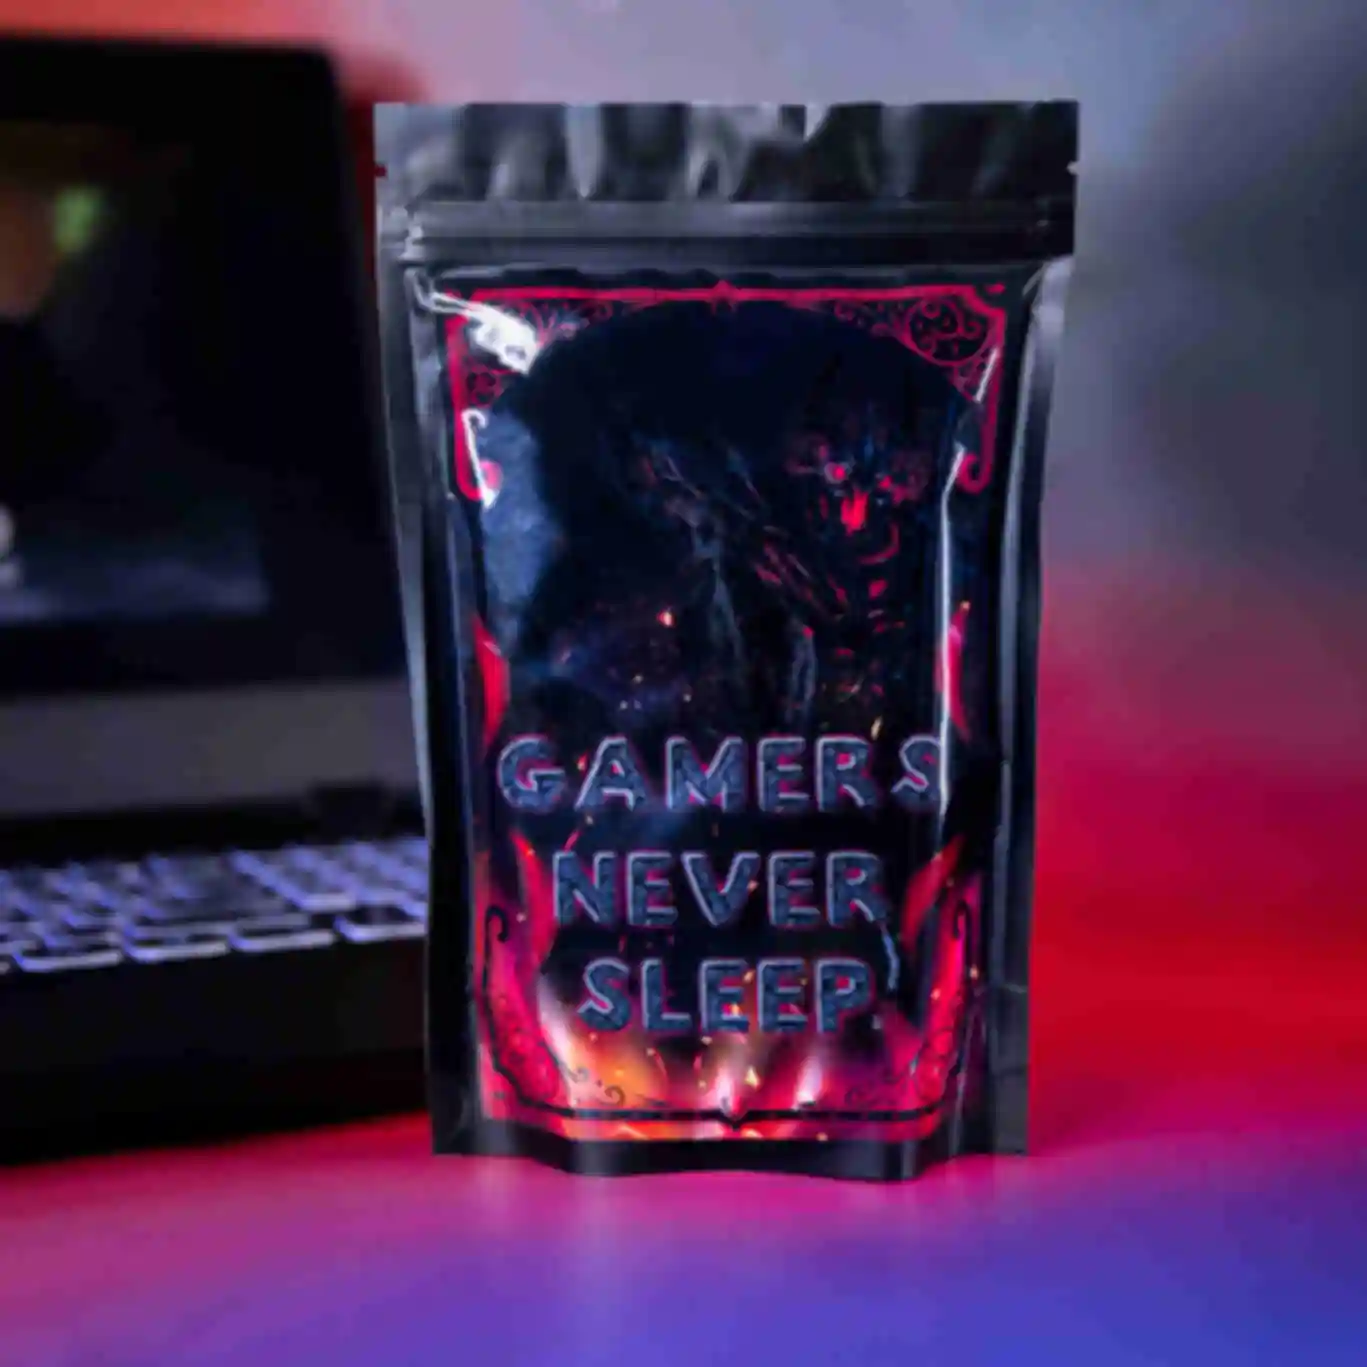 Упаковка кави "Gamers never sleep" • Їжа у стилі гри Дота 2 • Сувеніри на подарунок фанату ігорФото №1